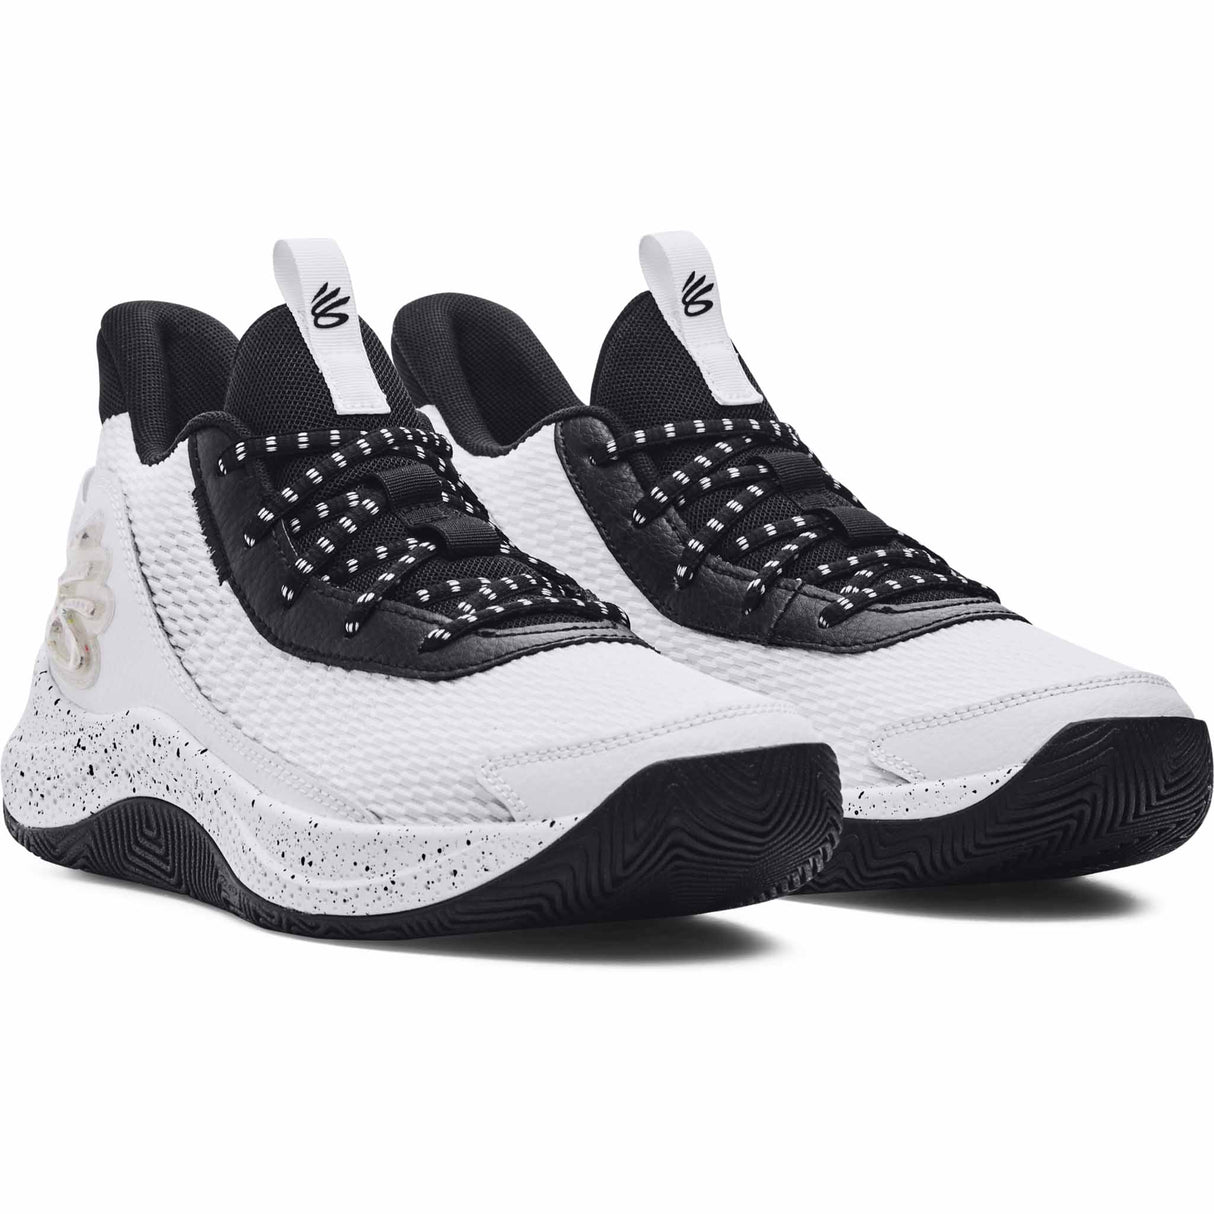 Under Armour Curry 3Z7 chaussures de basketball pour adulte - White / Black